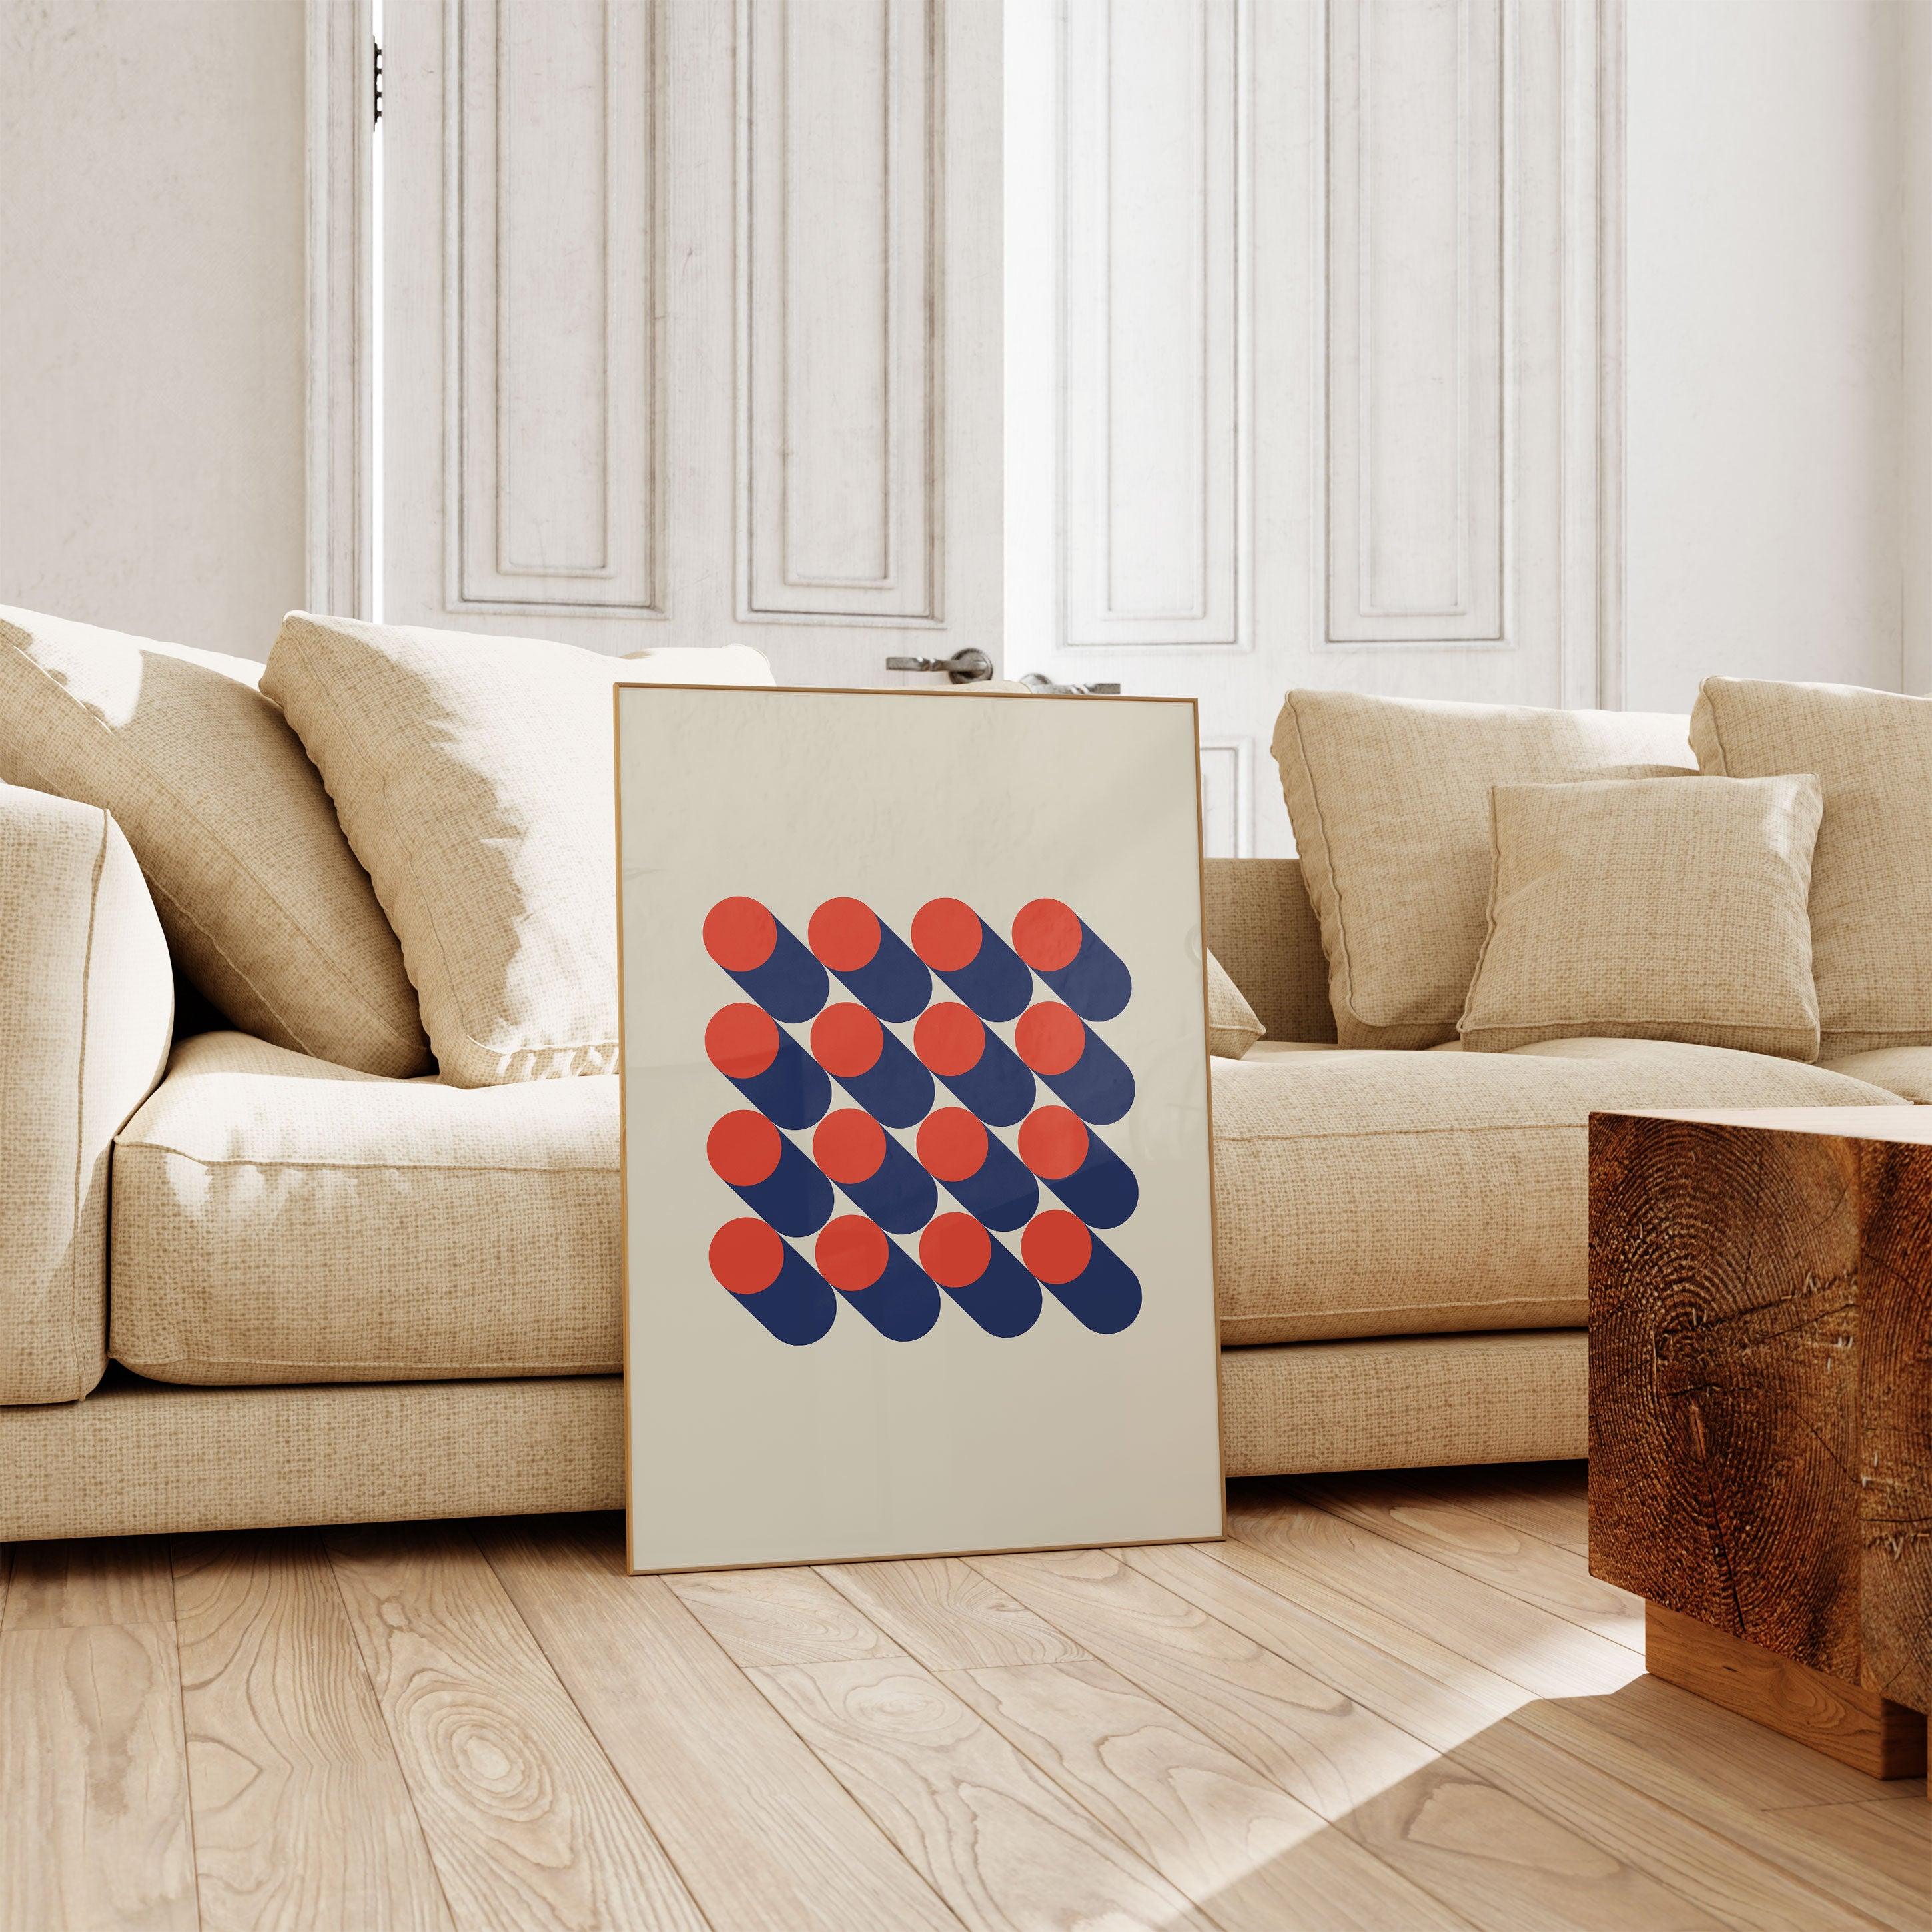 Bauhaus Red Dots - stravee - Wall Art Print